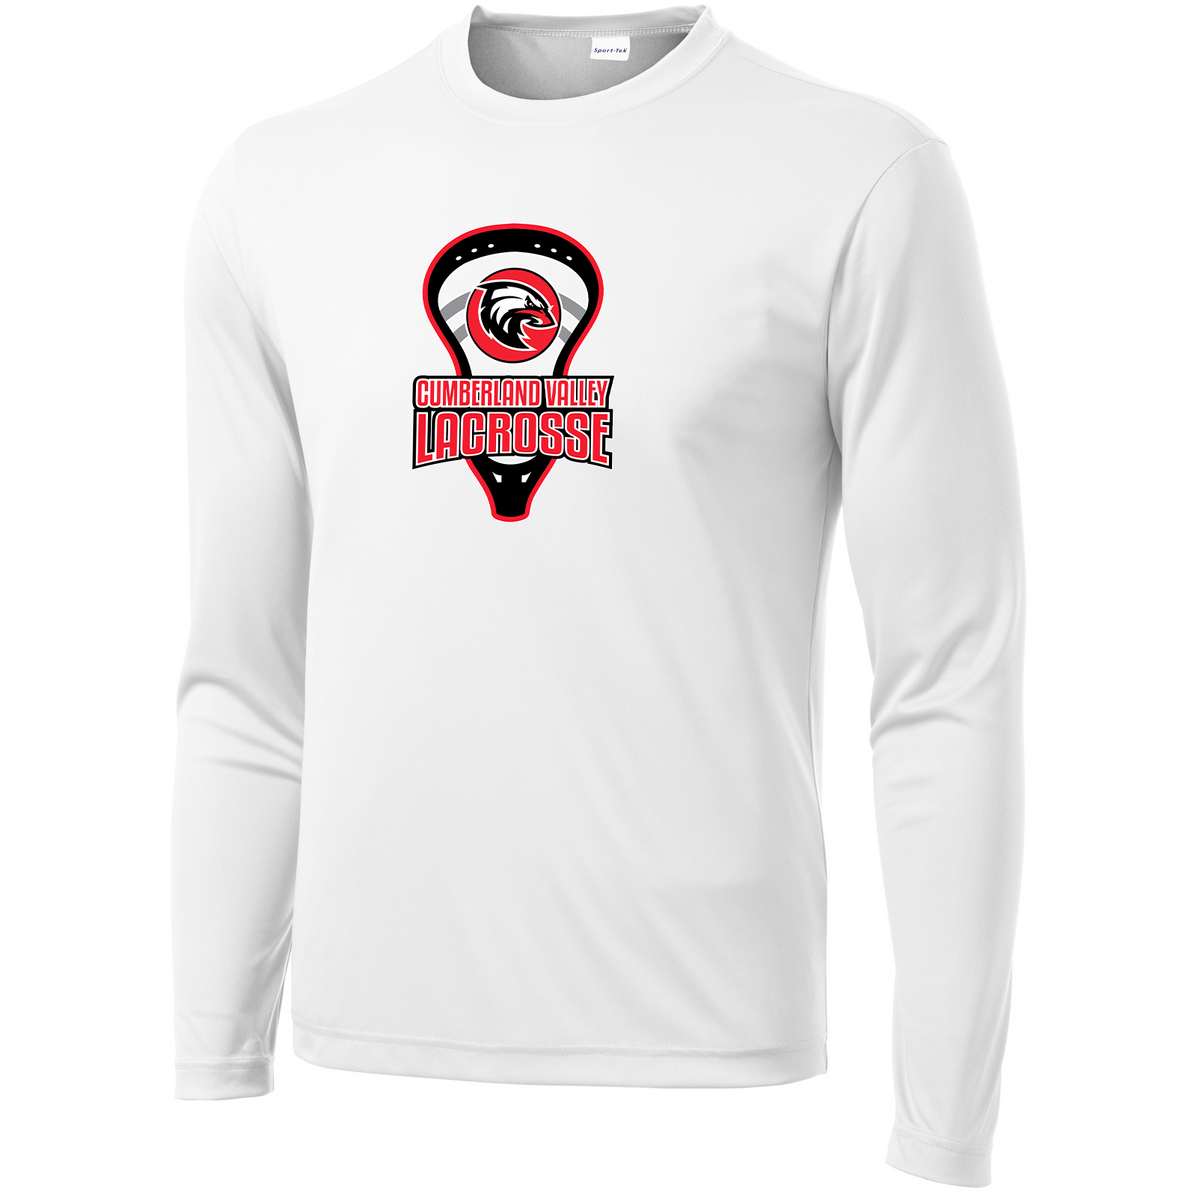 Cumberland Valley Lacrosse Long Sleeve Performance Shirt